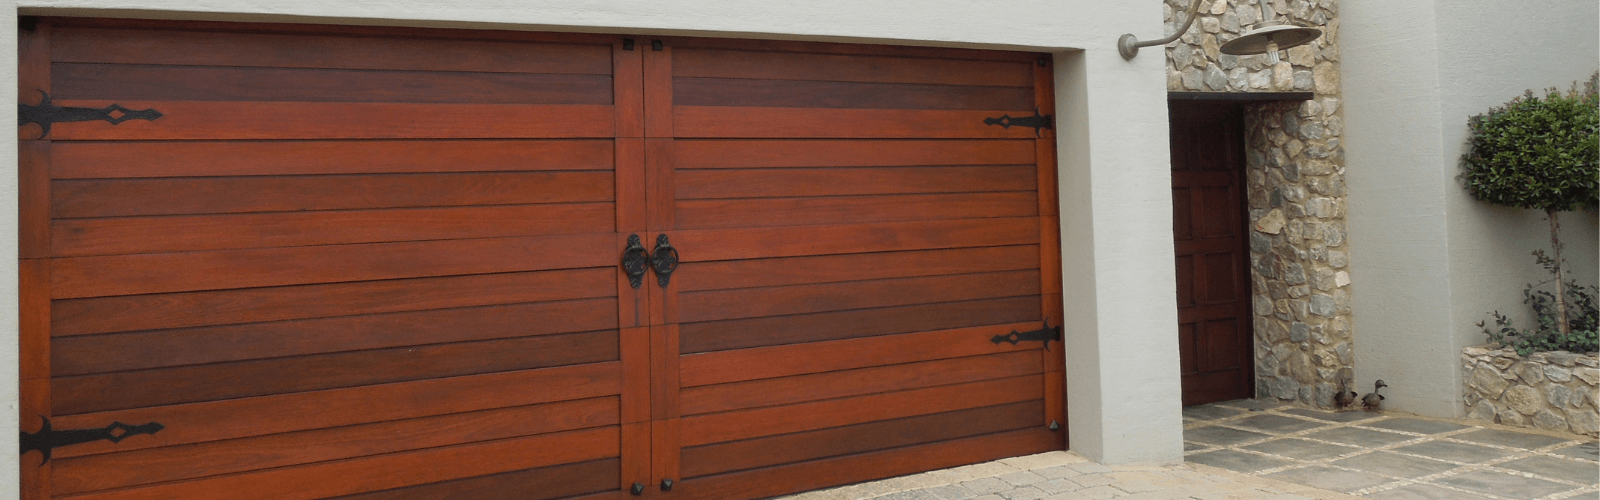 Custom Timber Garage Doors